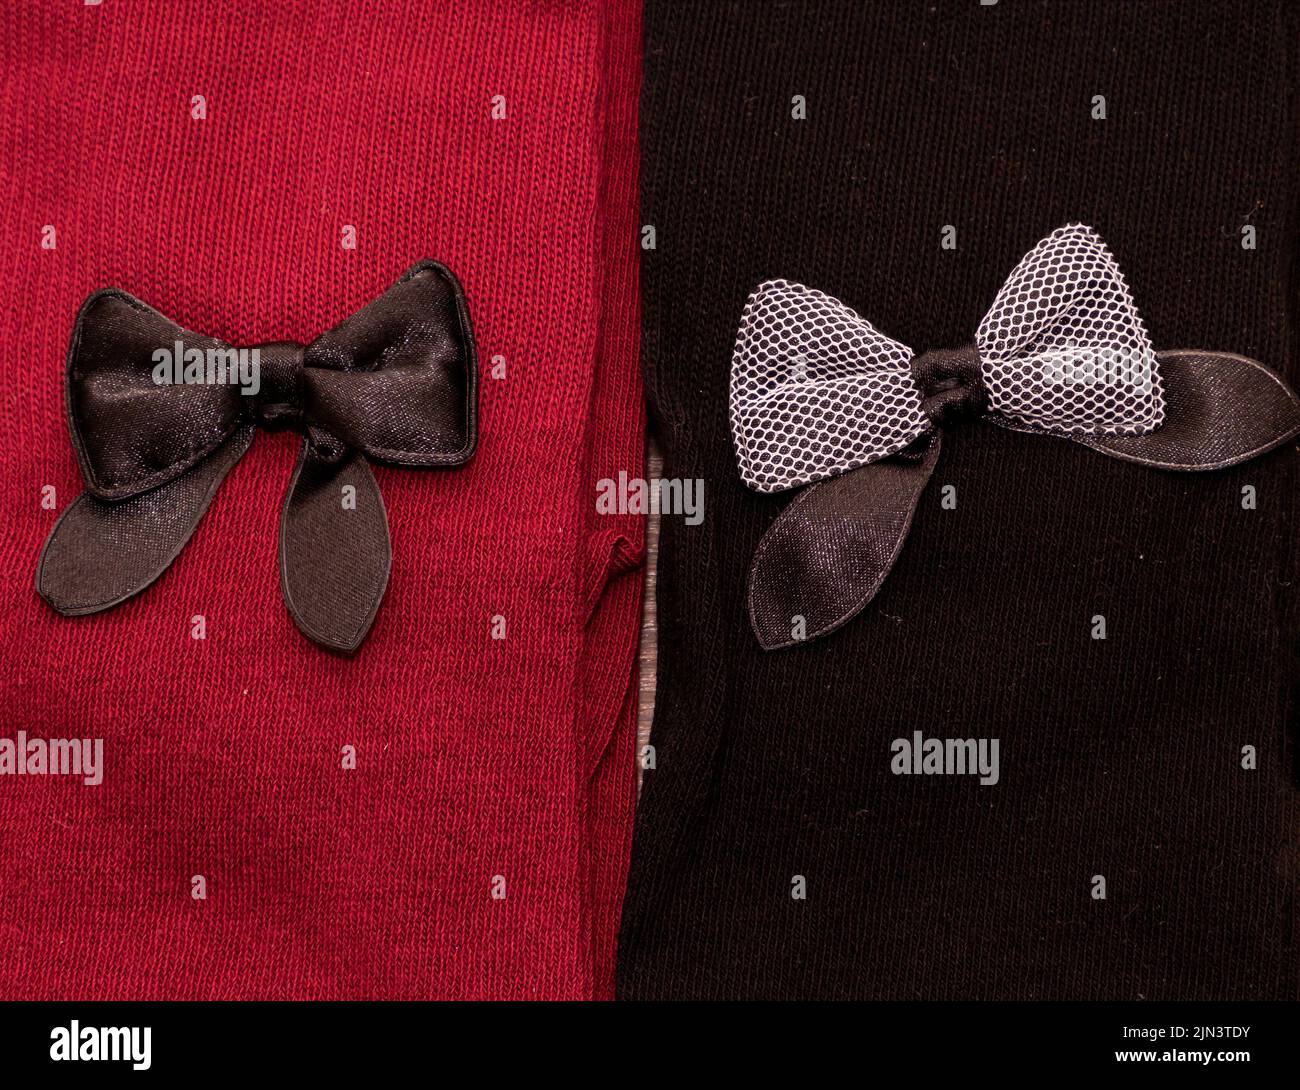 Decorative bows on retro cotton socks clothing accessory Stock Photo